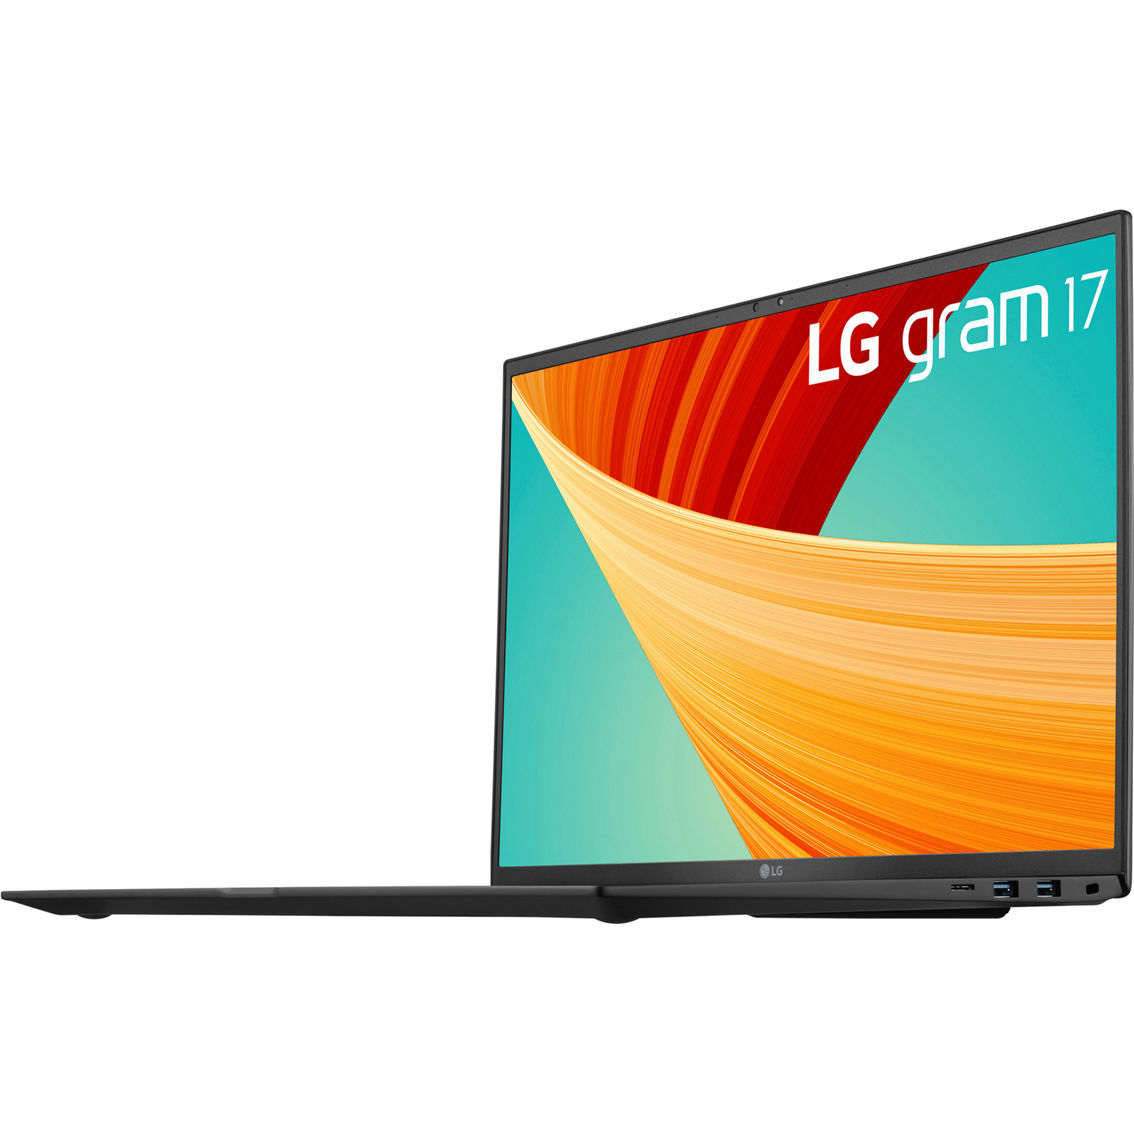 LG gram 17 in. Intel Evo Core i7 2.2GHz 16GB RAM 1TB SSD Laptop - Image 4 of 9